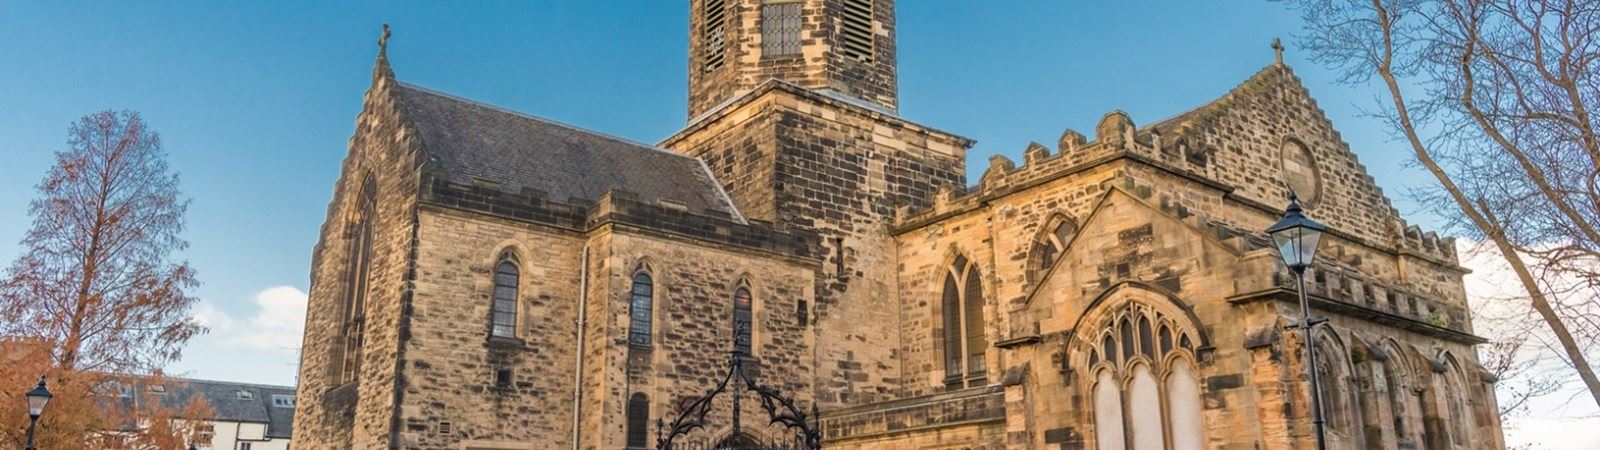 Falkirk Trinity Church - Sir John de Graham Tomb